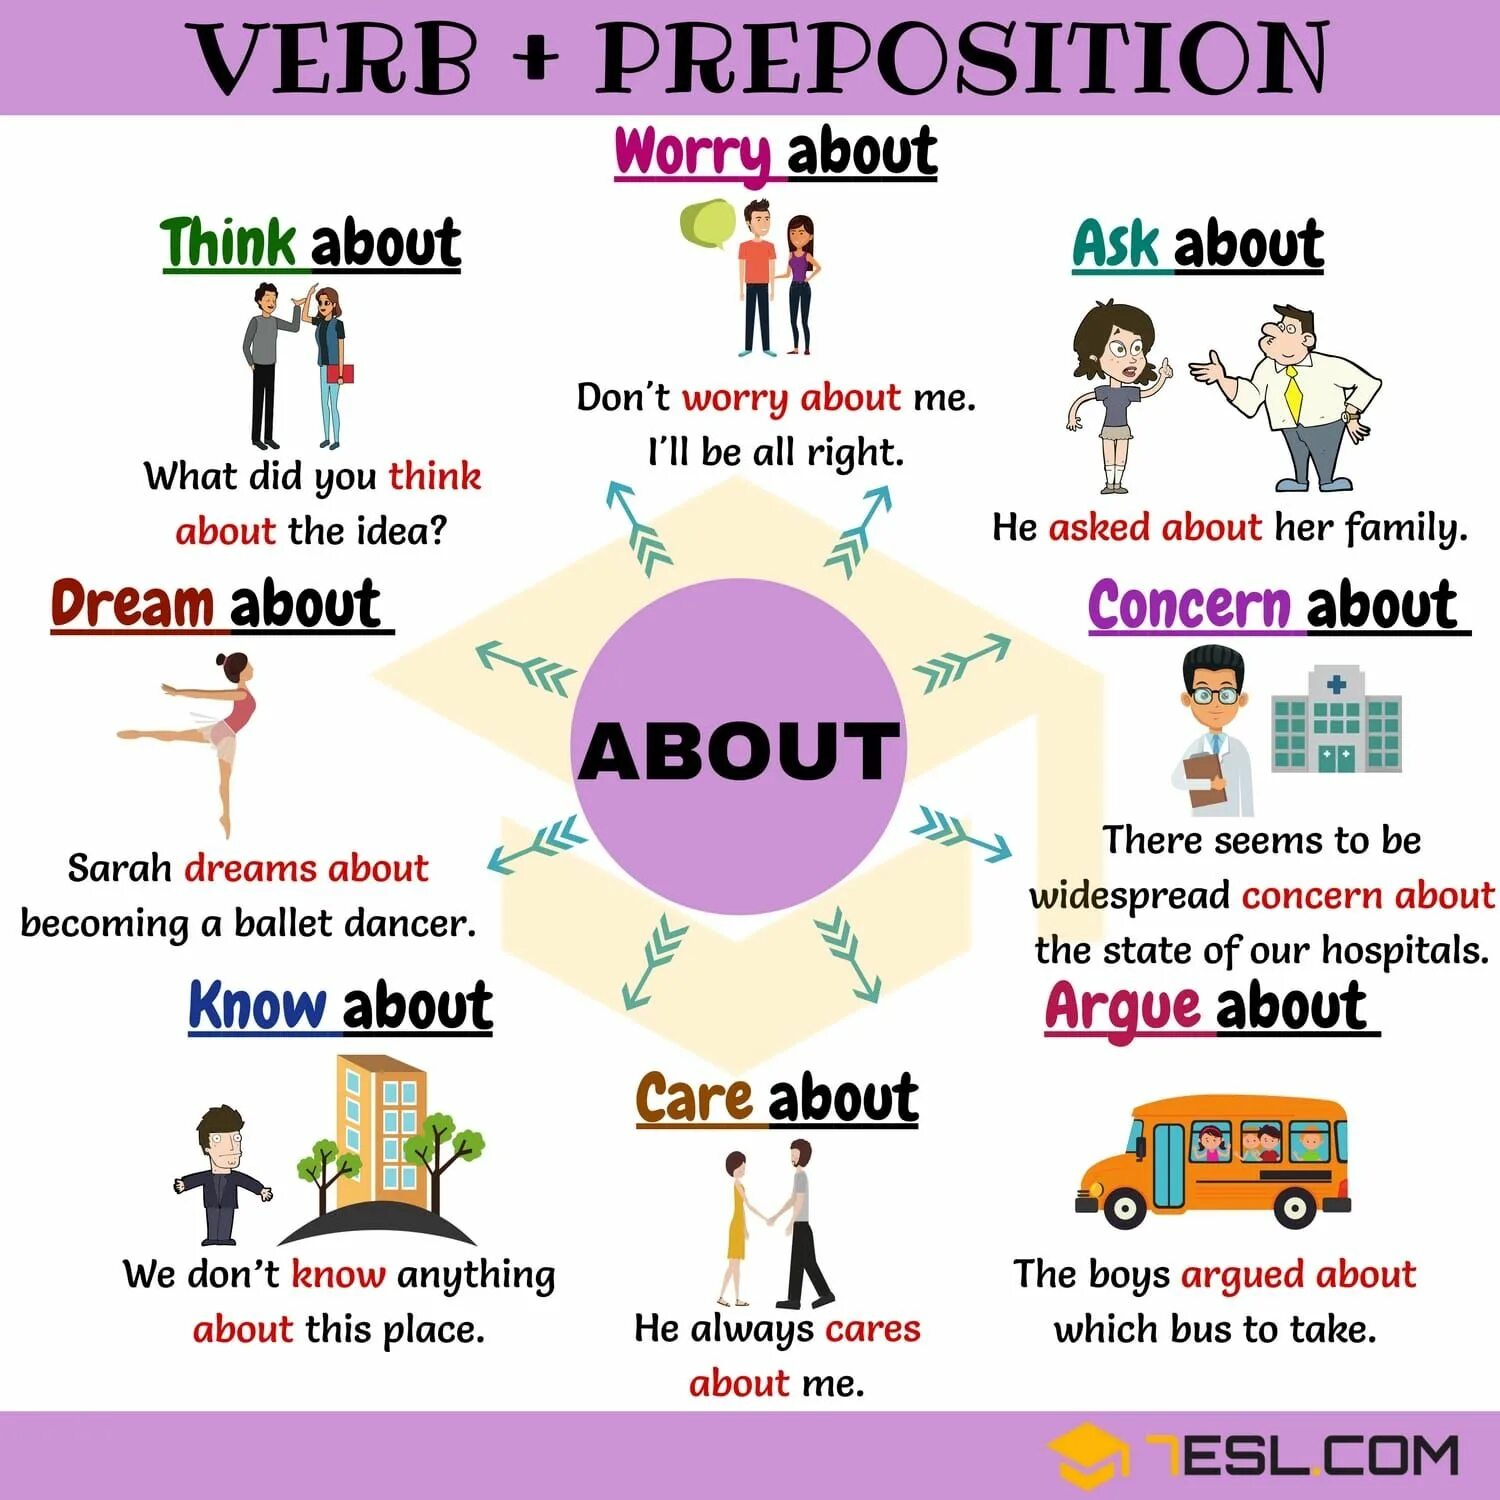 She topic. Prepositional verbs в английском языке. Verbs with prepositions в английском языке. About в английском языке. Prepositions в английском.